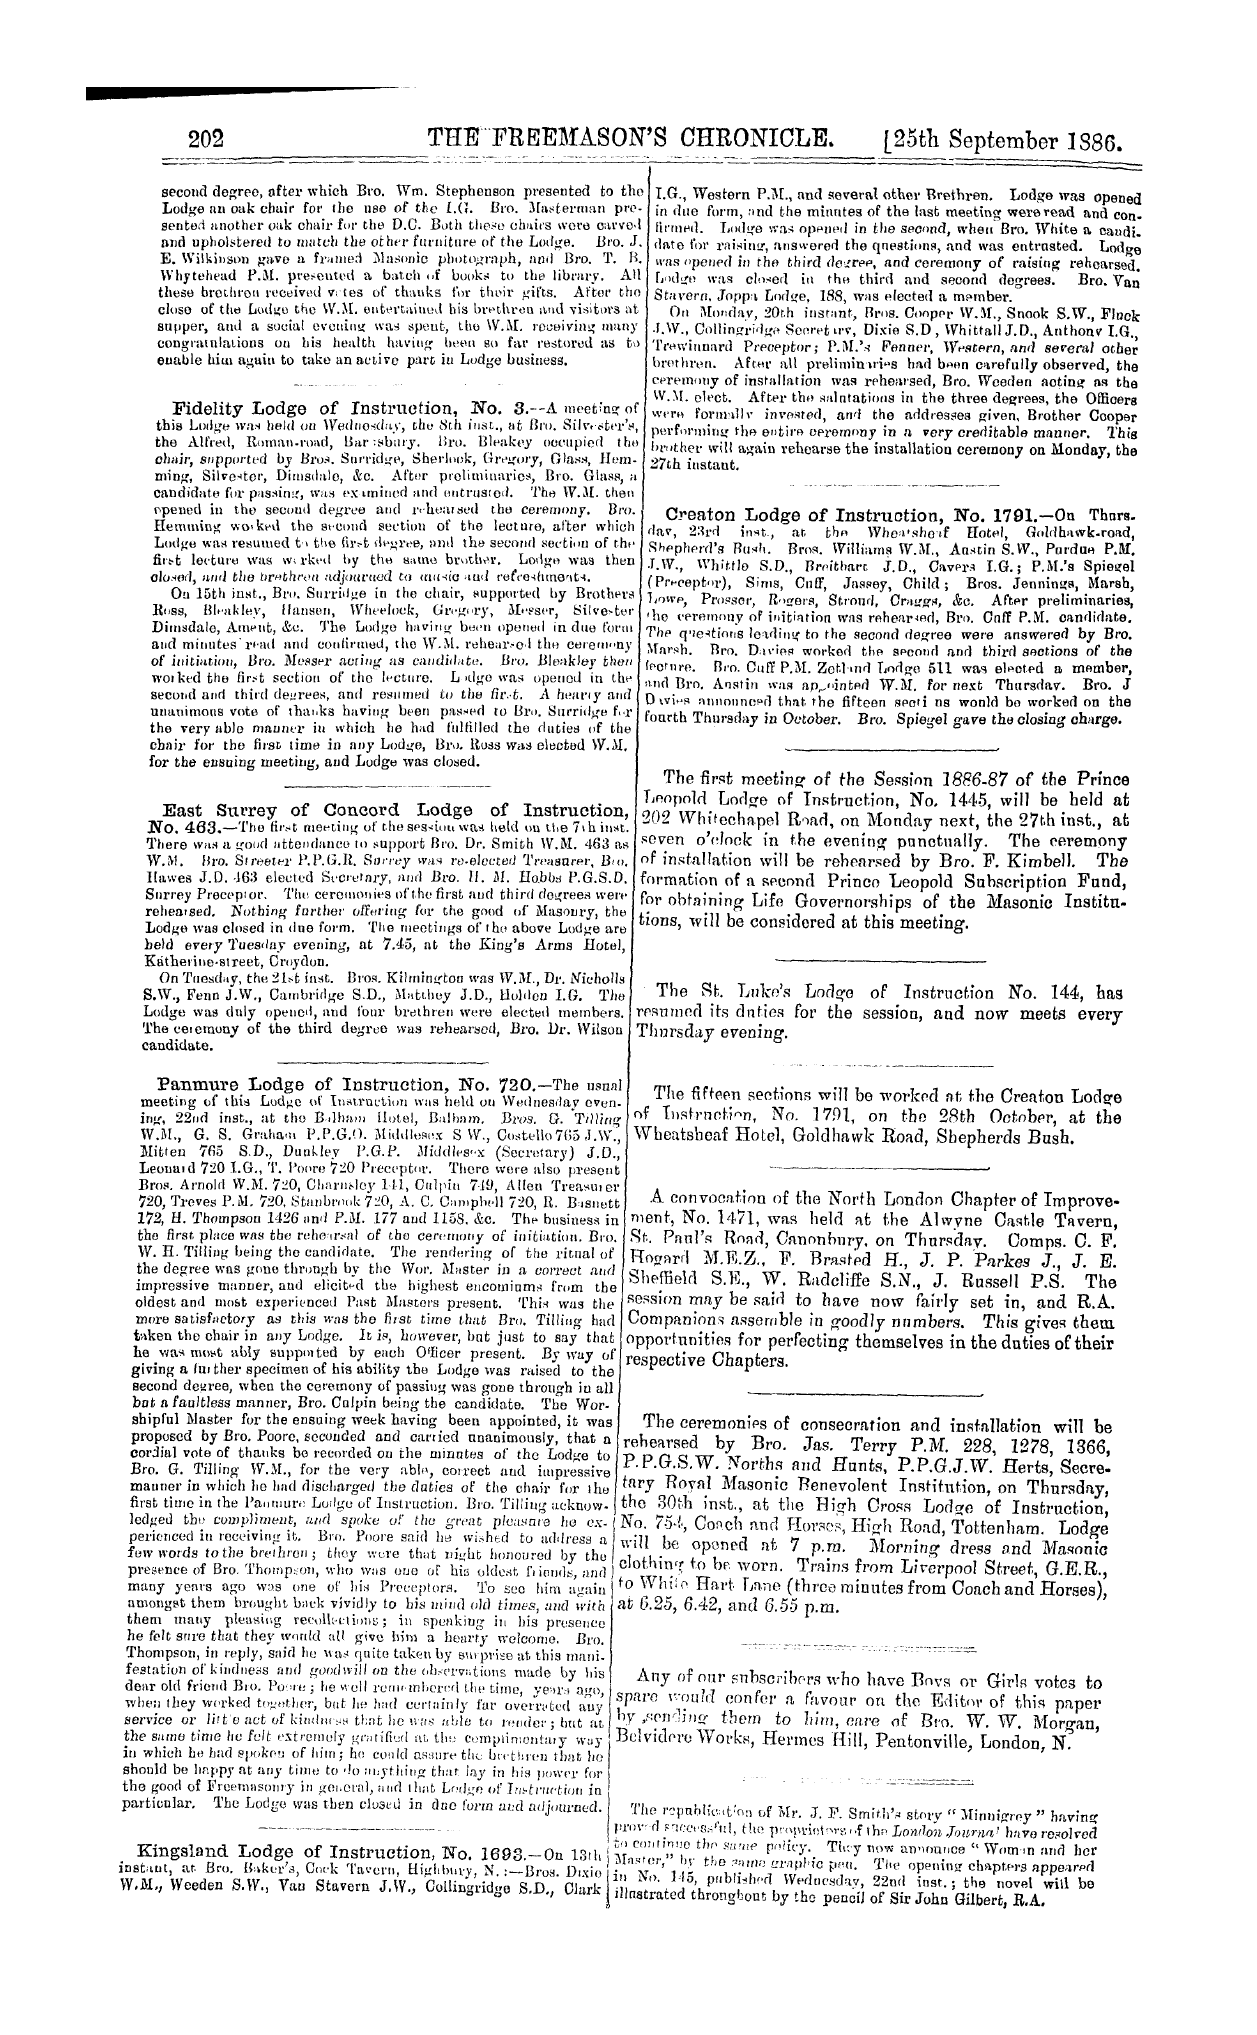 The Freemason's Chronicle: 1886-09-25 - Eboracum Lodge, No. 1611.